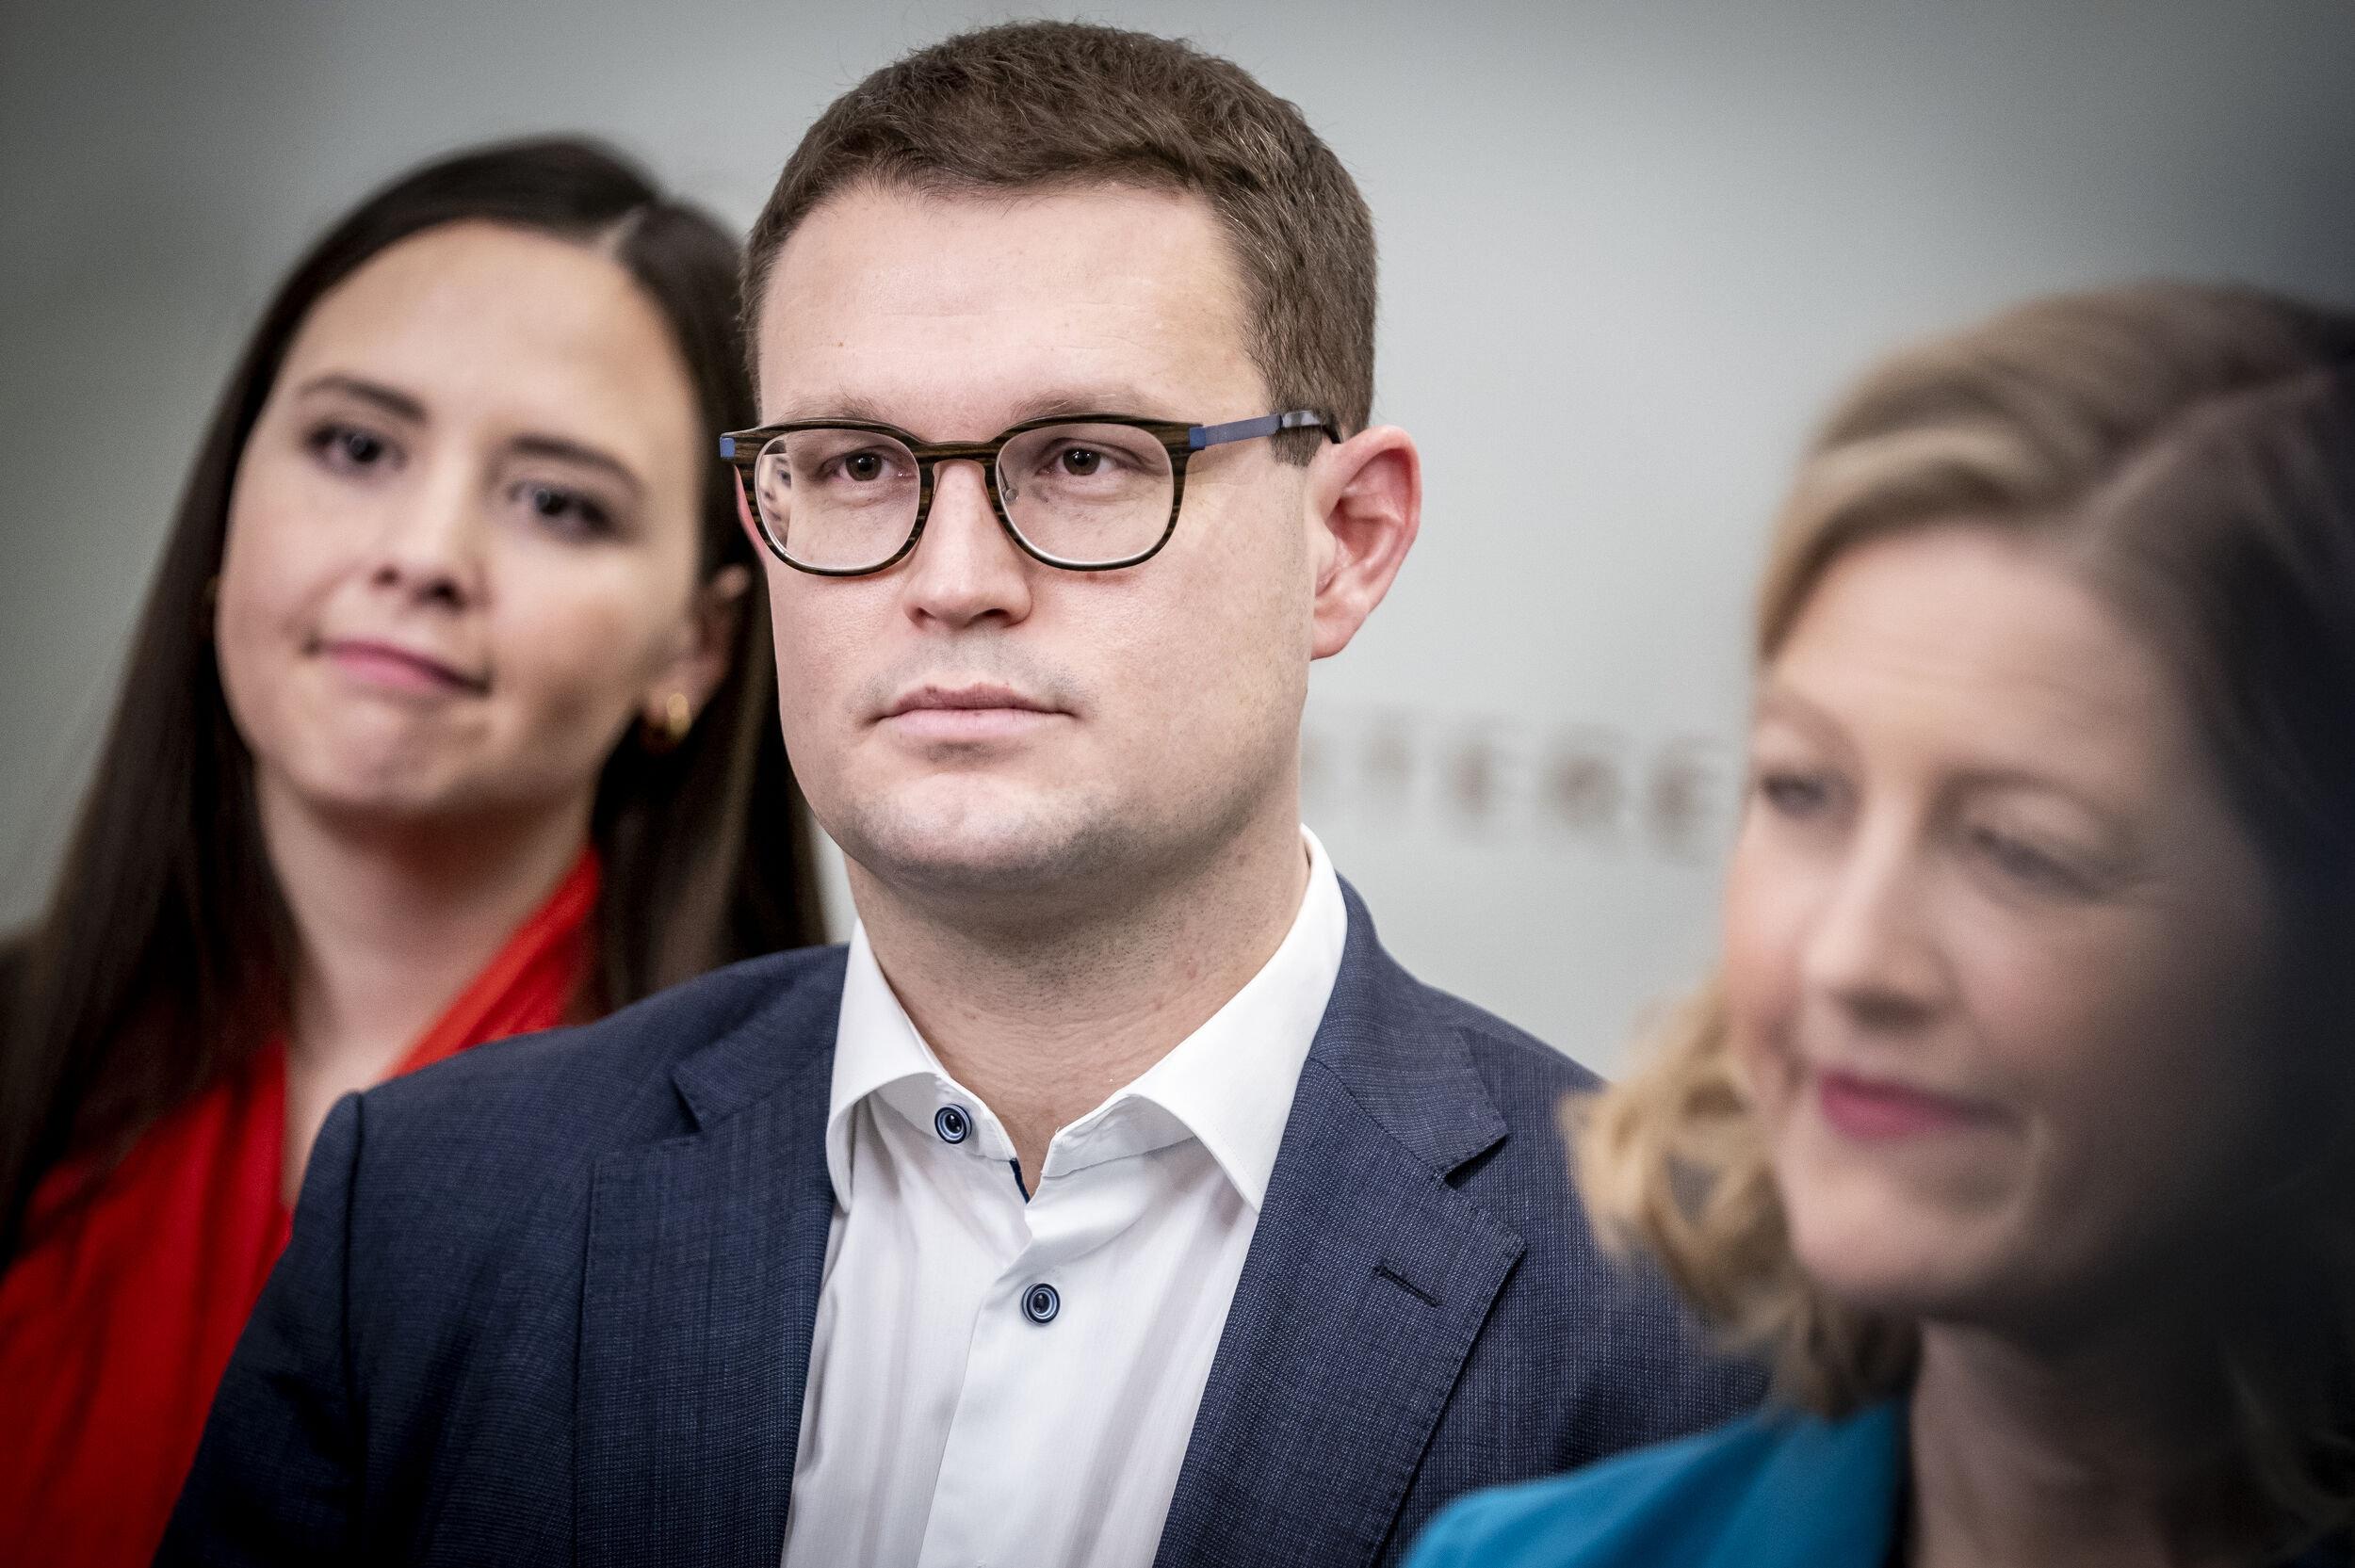 Socialdemokratiets politiske ordfører, Christian Rabjerg Madsen, tager oppositionens kritik med ro og henviser til, at regeringen på under et år har indgået 39 politiske aftaler. 